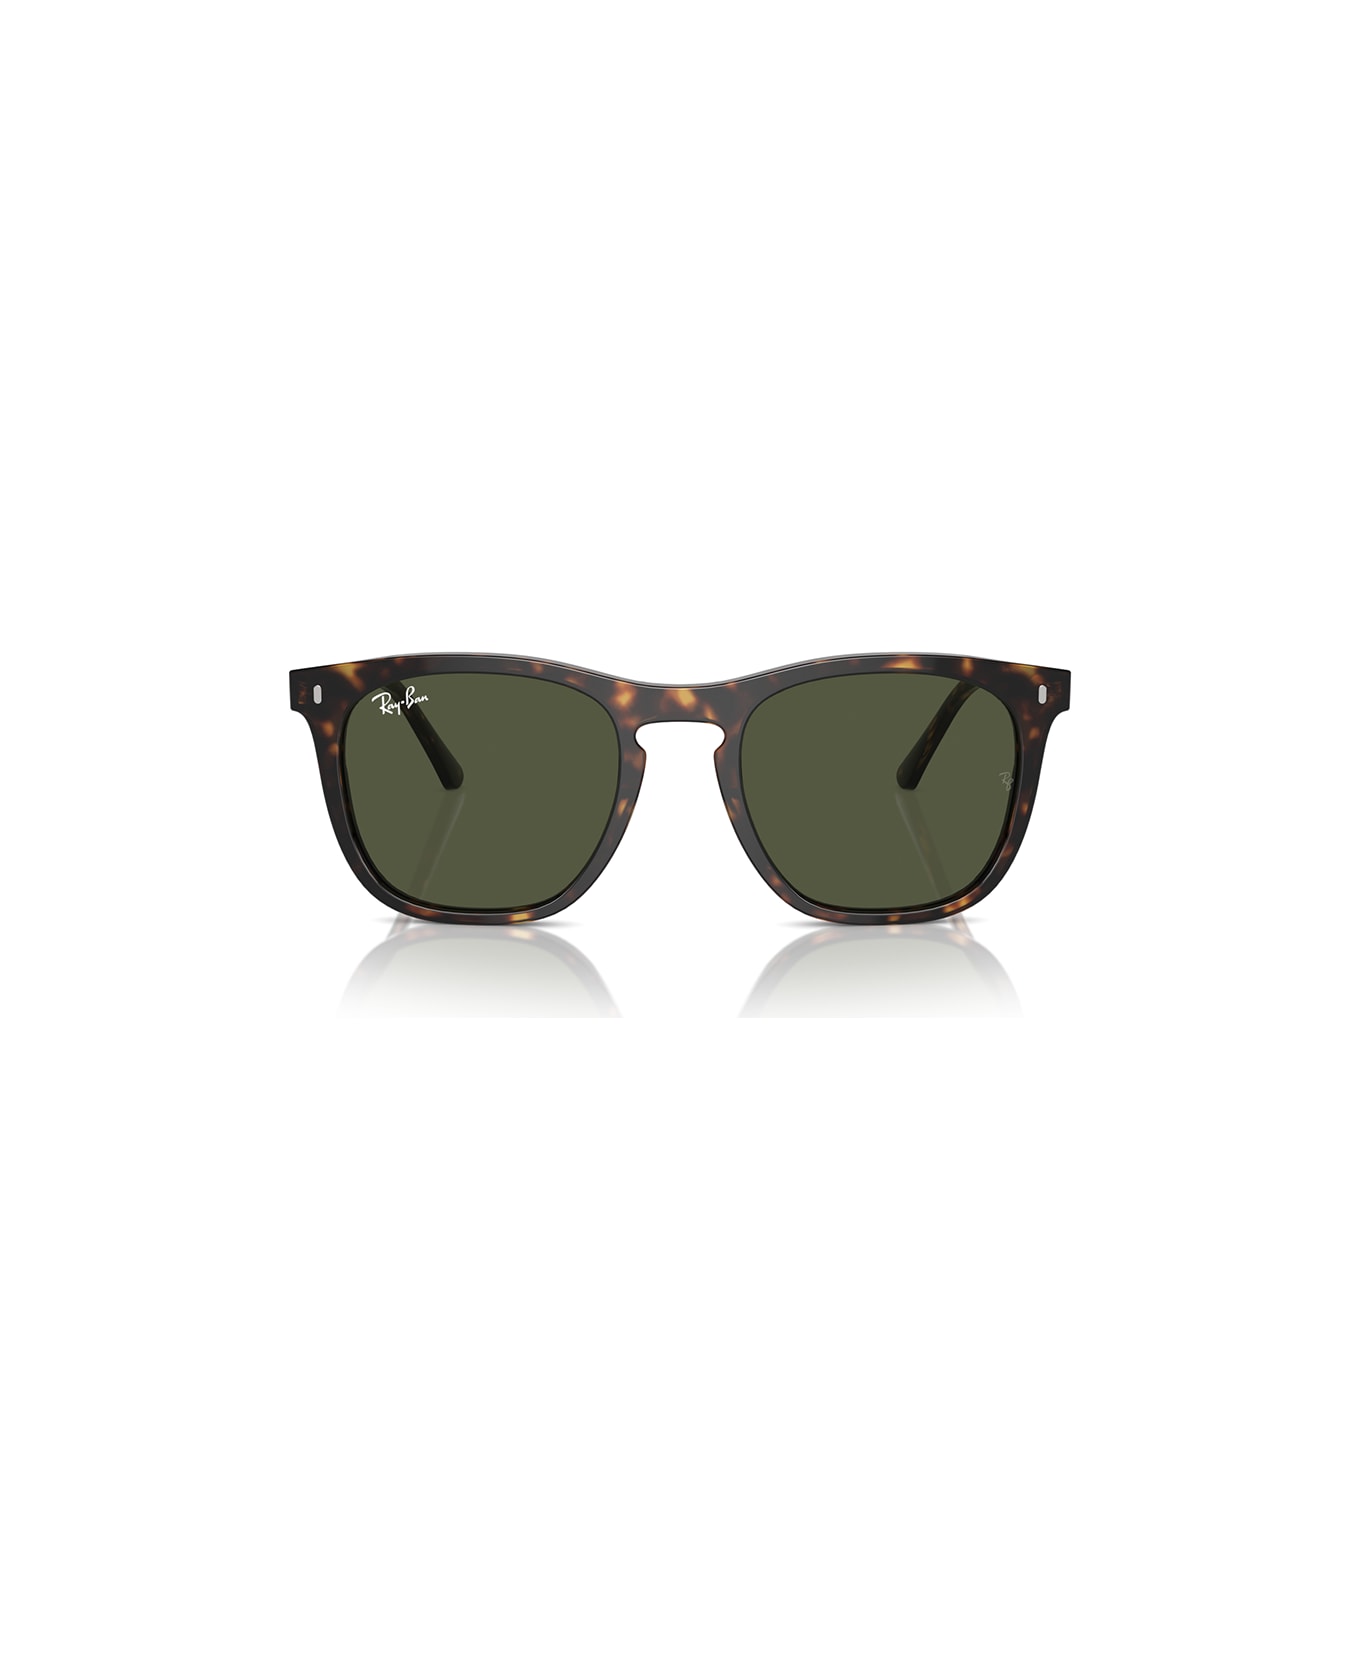 Ray-Ban Sunglasses - Havana/Verde